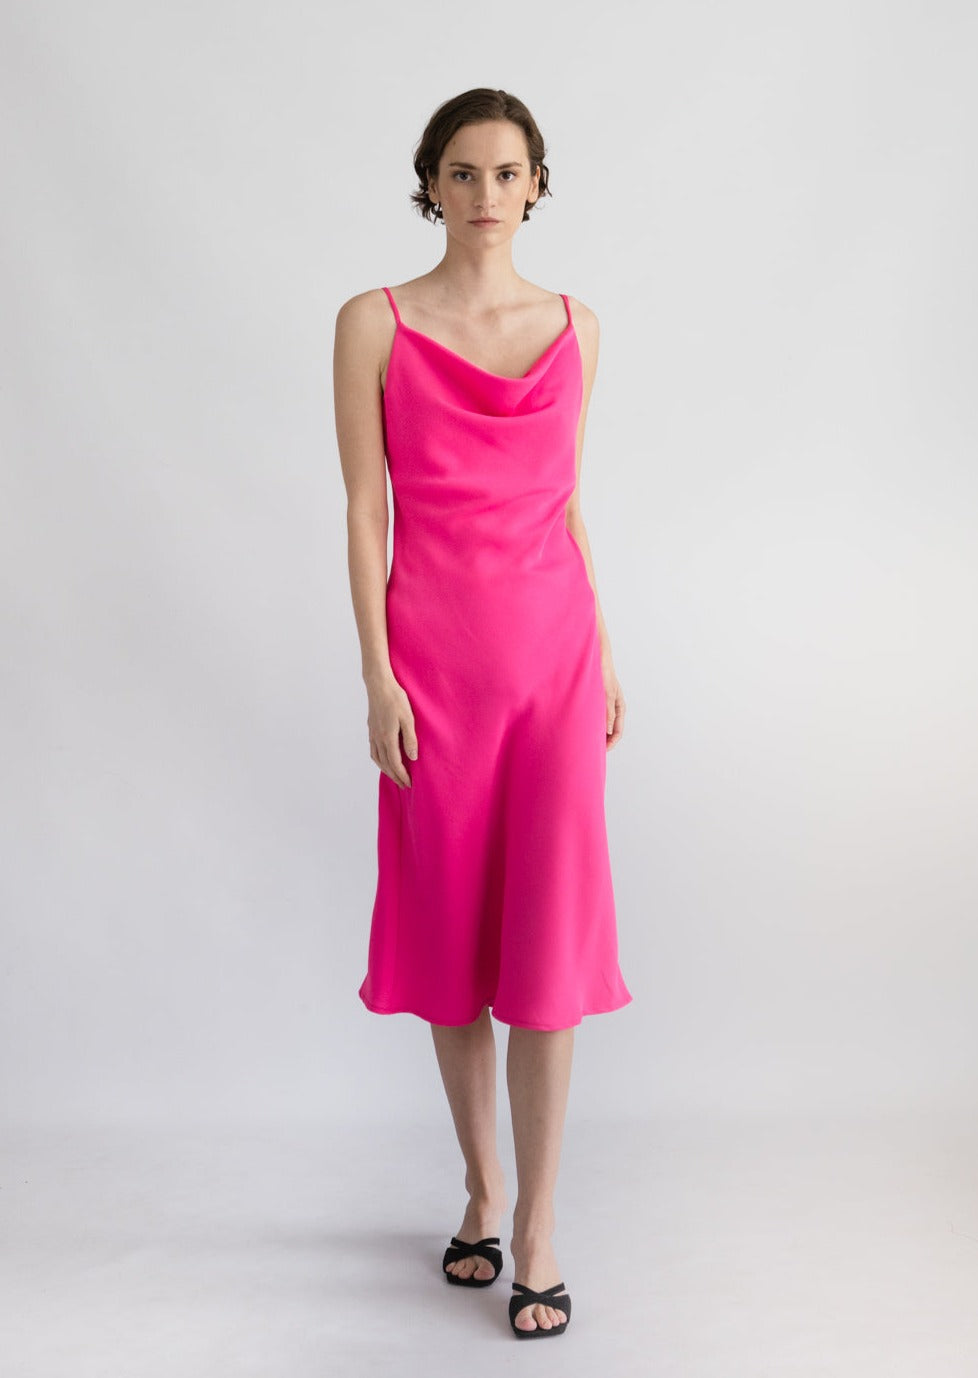 WAVE COCKTAIL DRESS, Hot pink